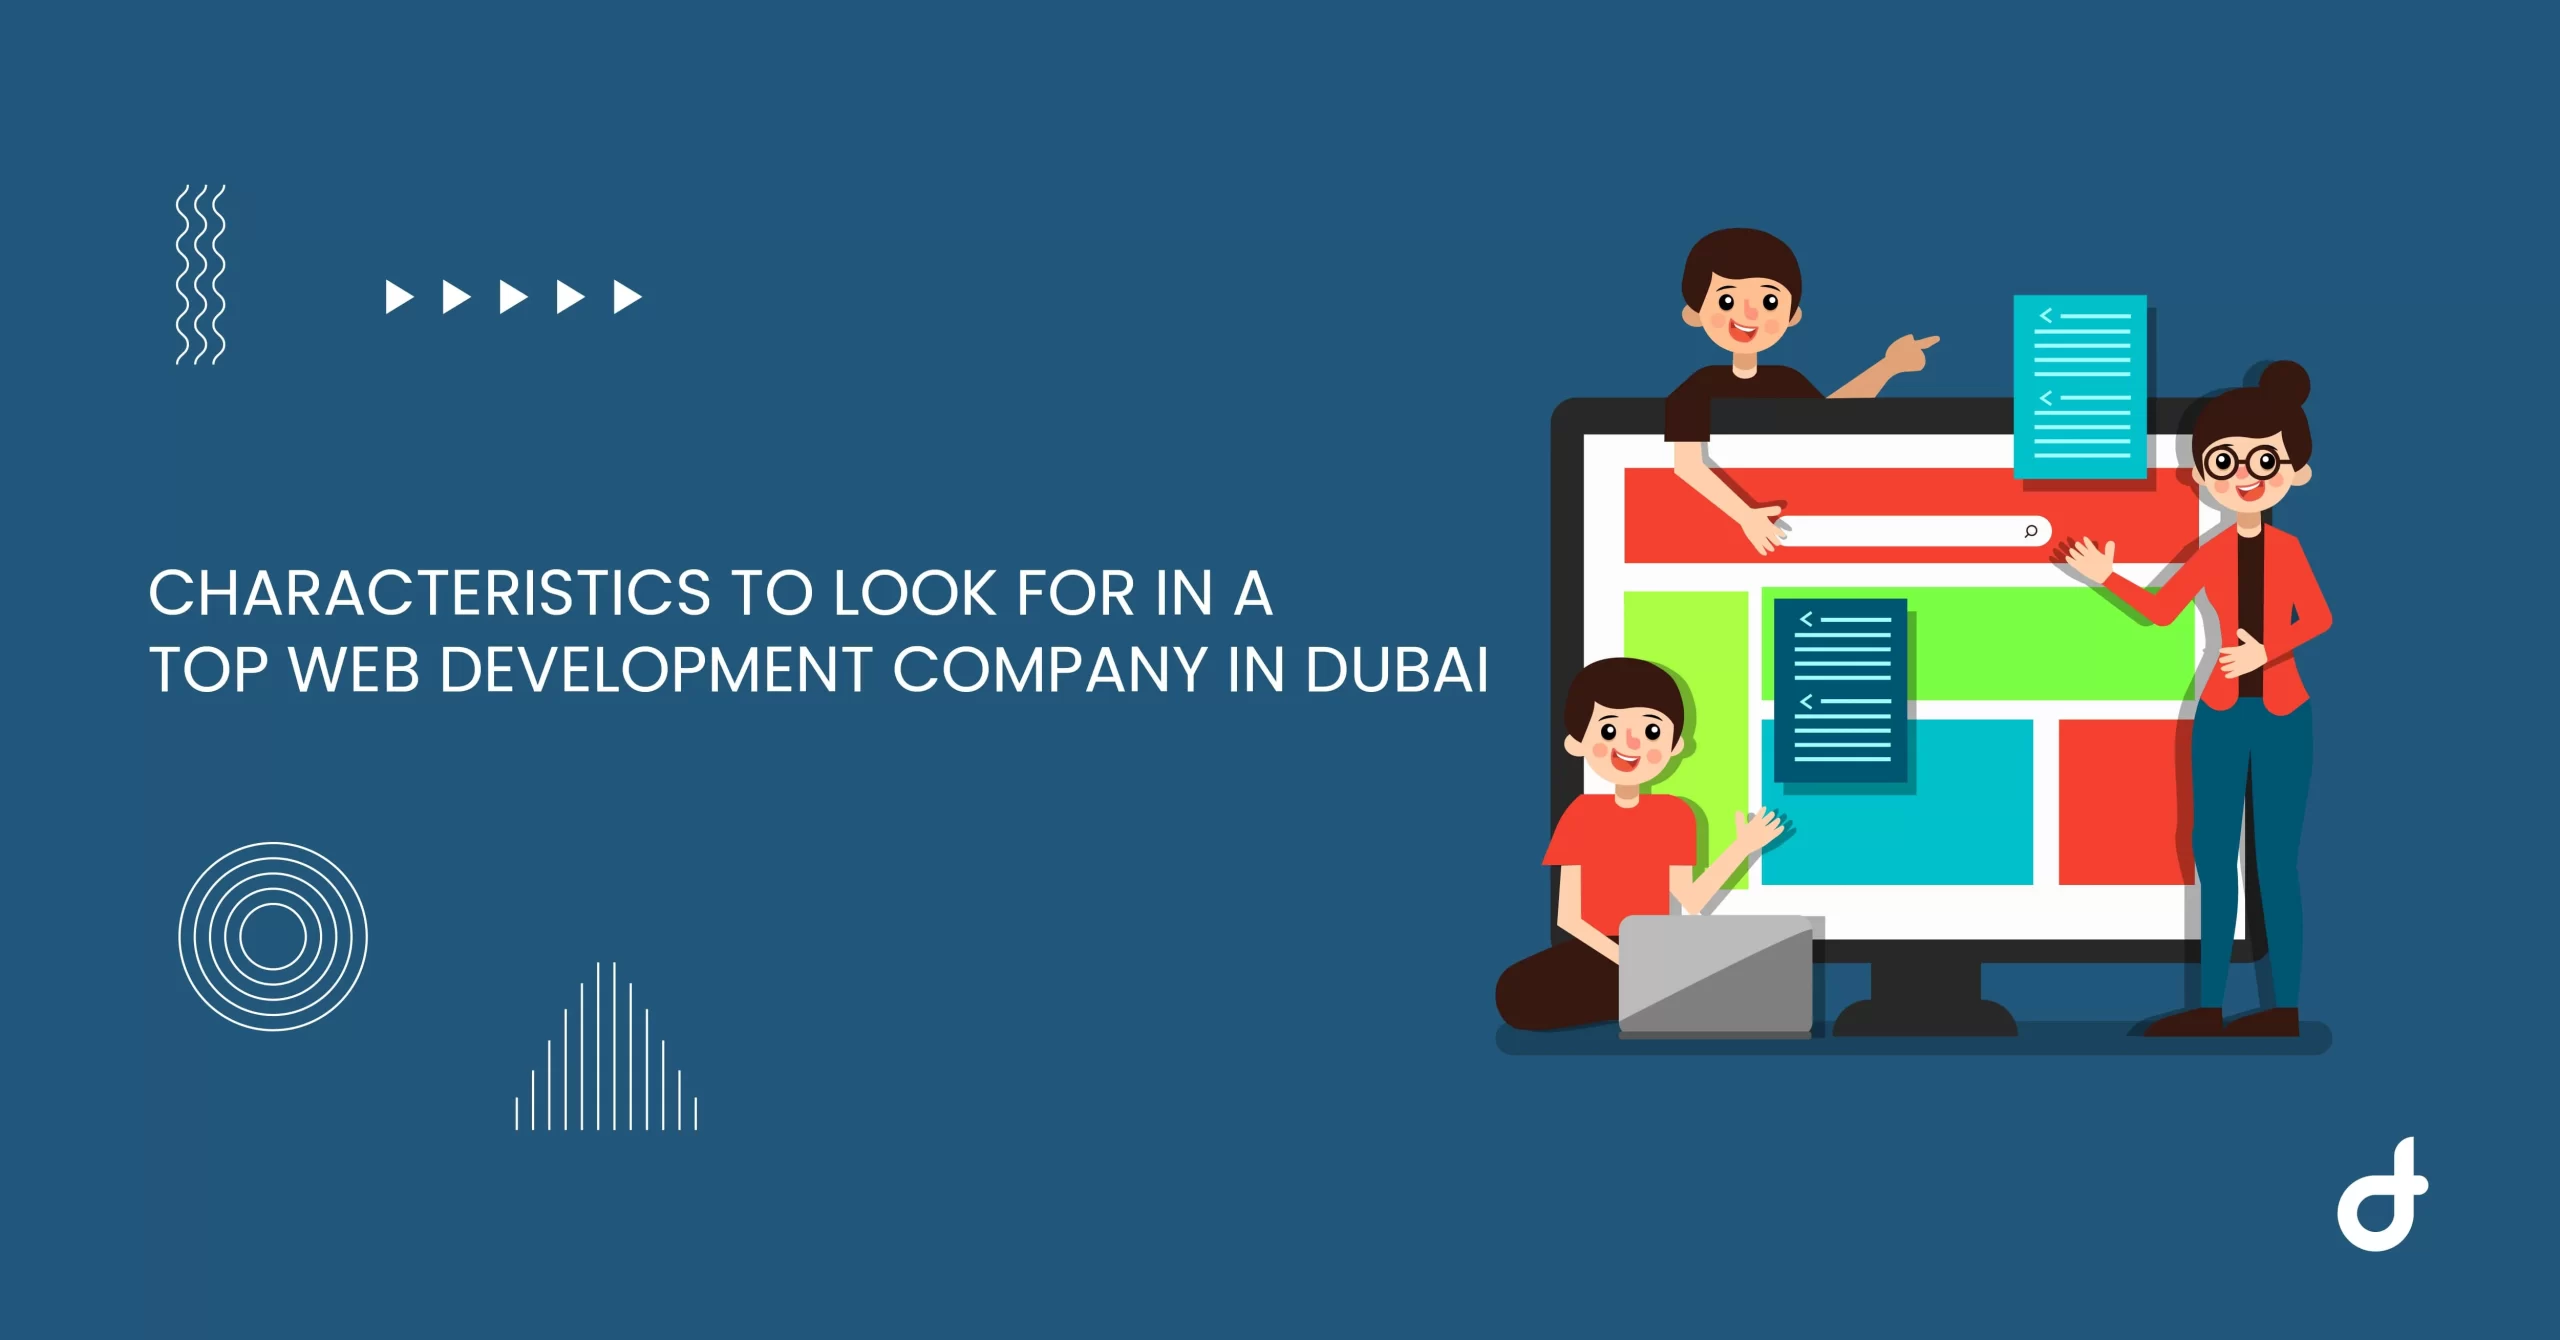 Qualities of a Top Web Development Company in Dubai